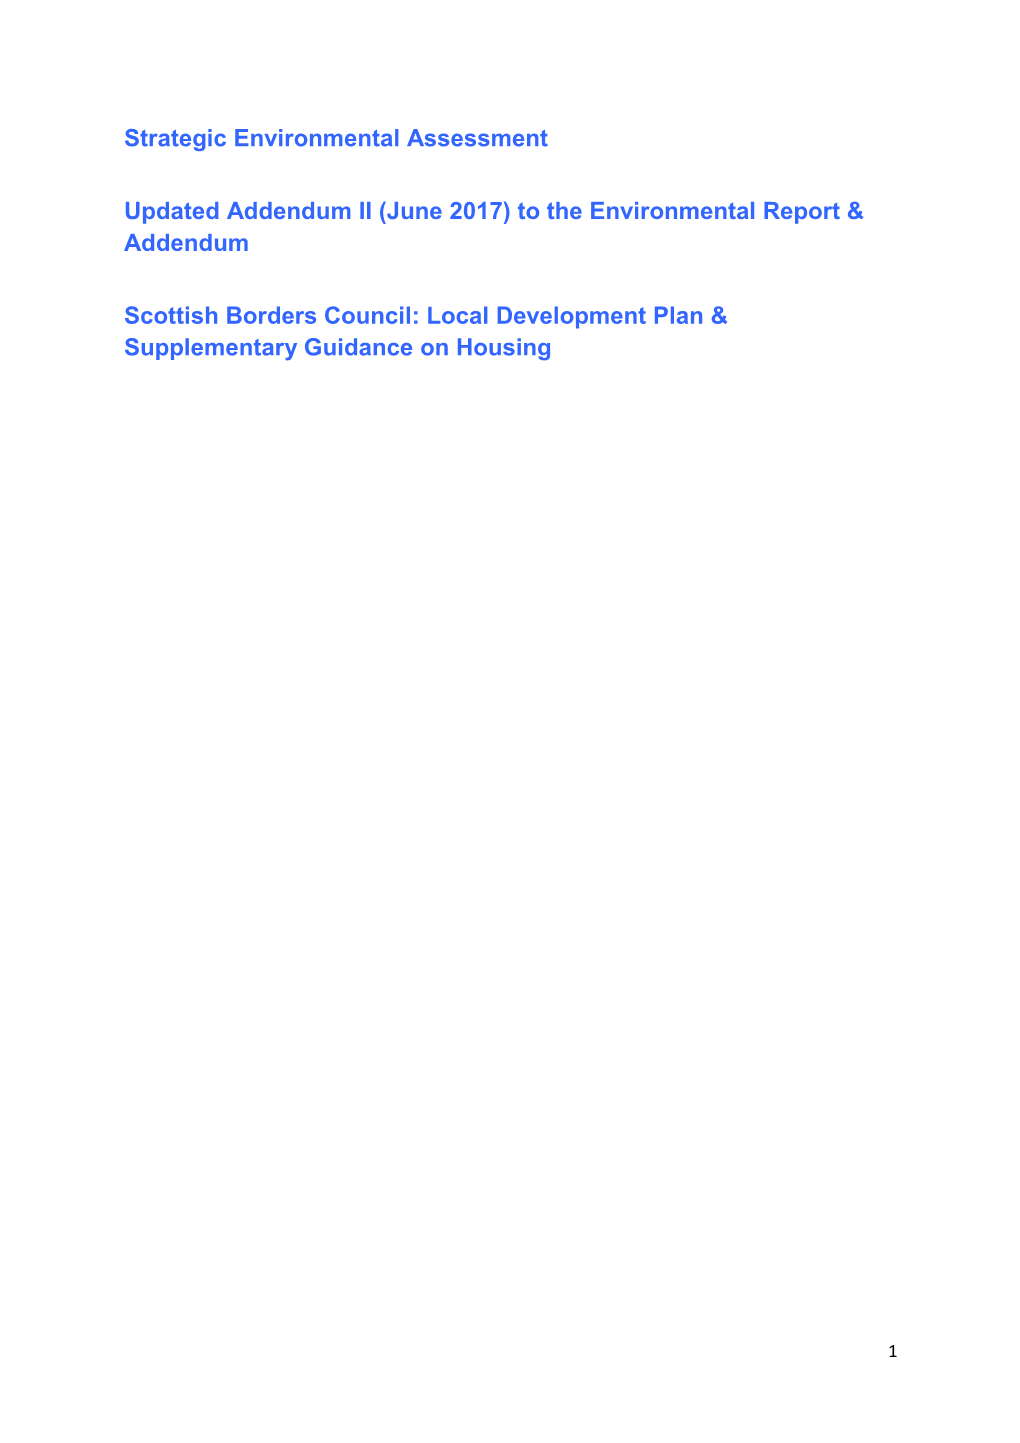 Strategic Environmental Assessment Updated Addendum II (June 2017)